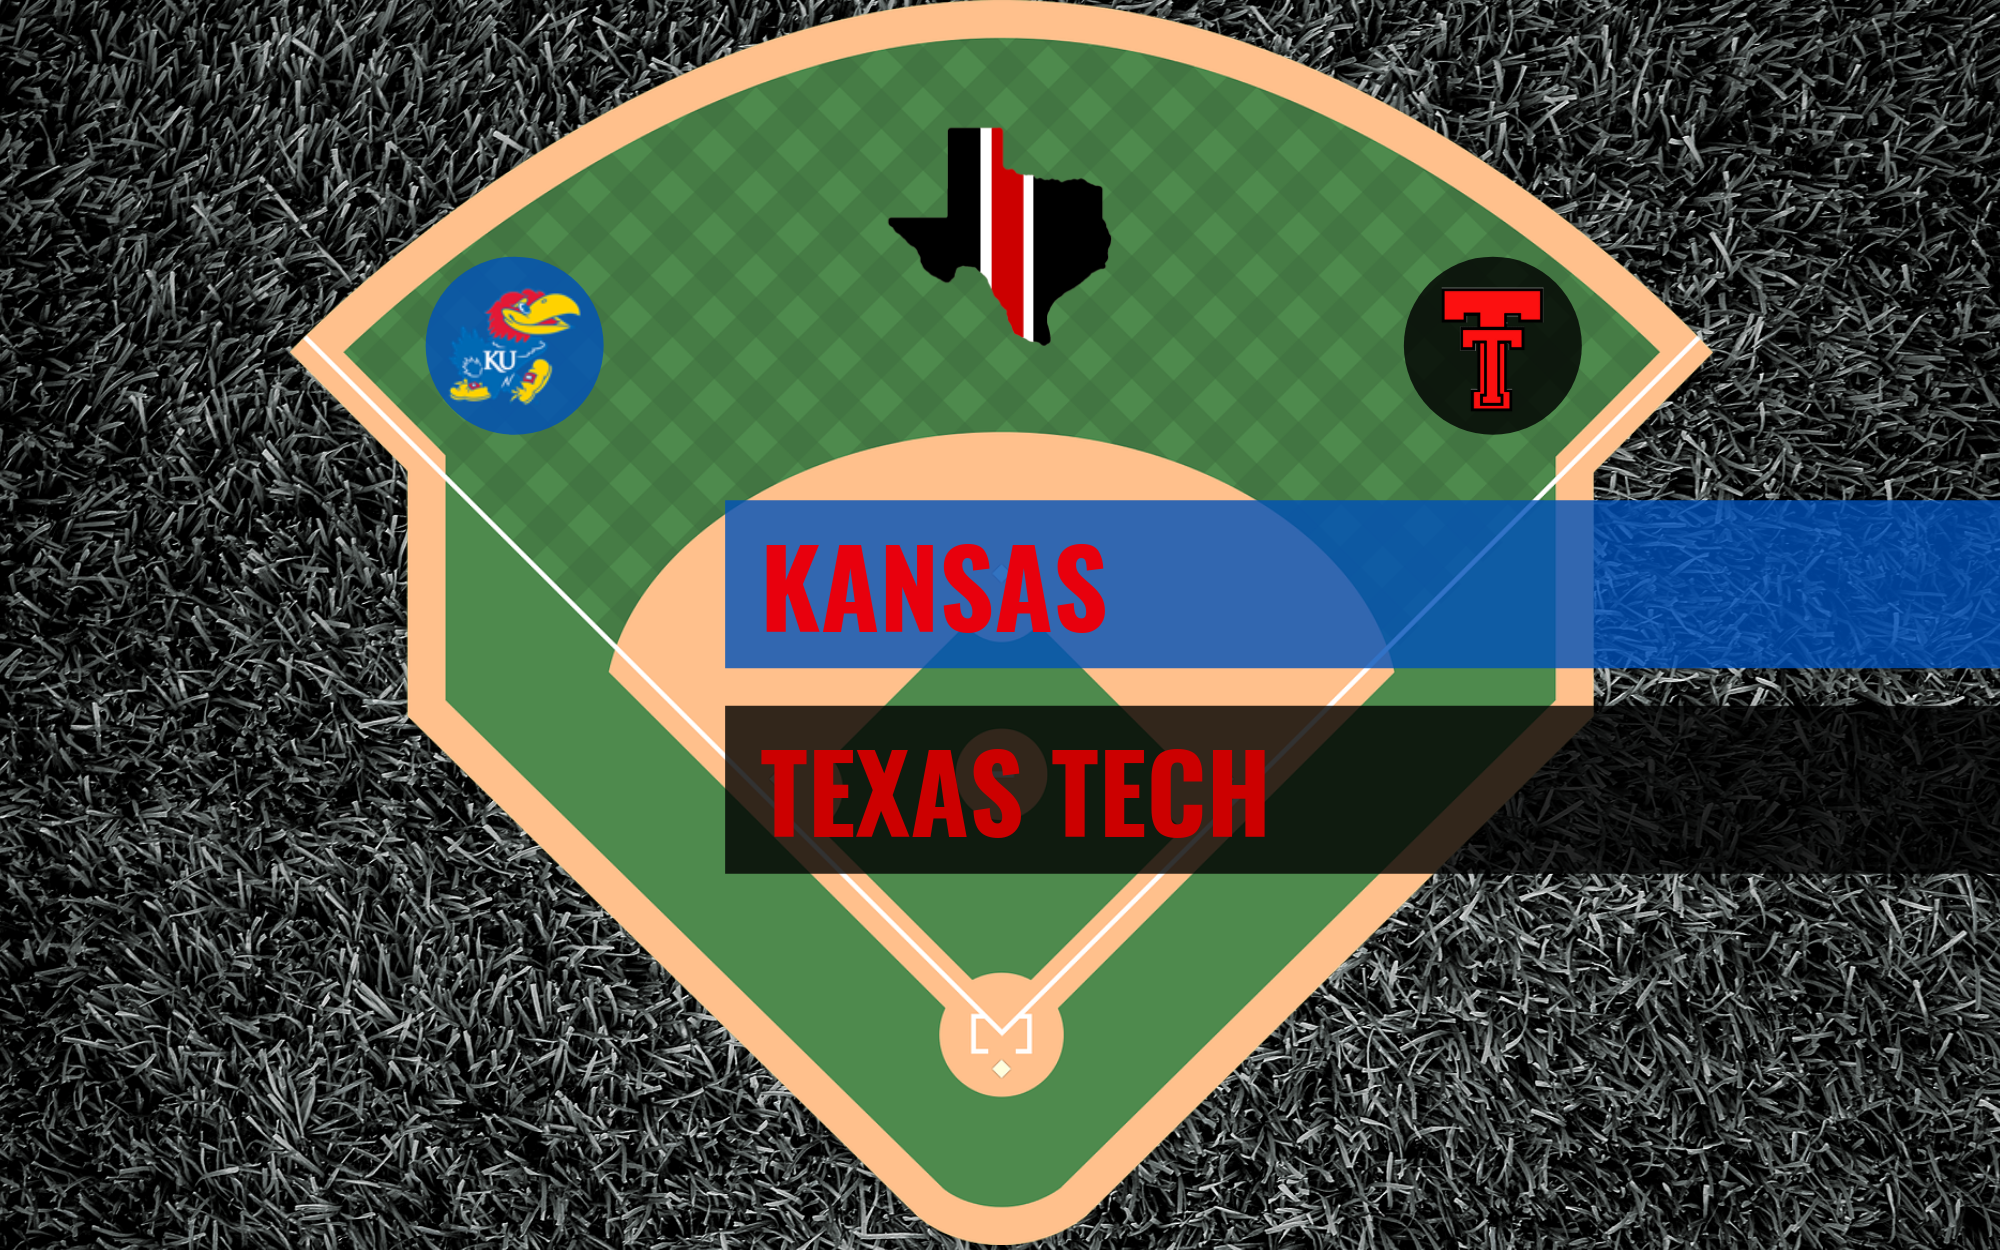 Preview & Series Thread: Kansas vs. Texas Tech